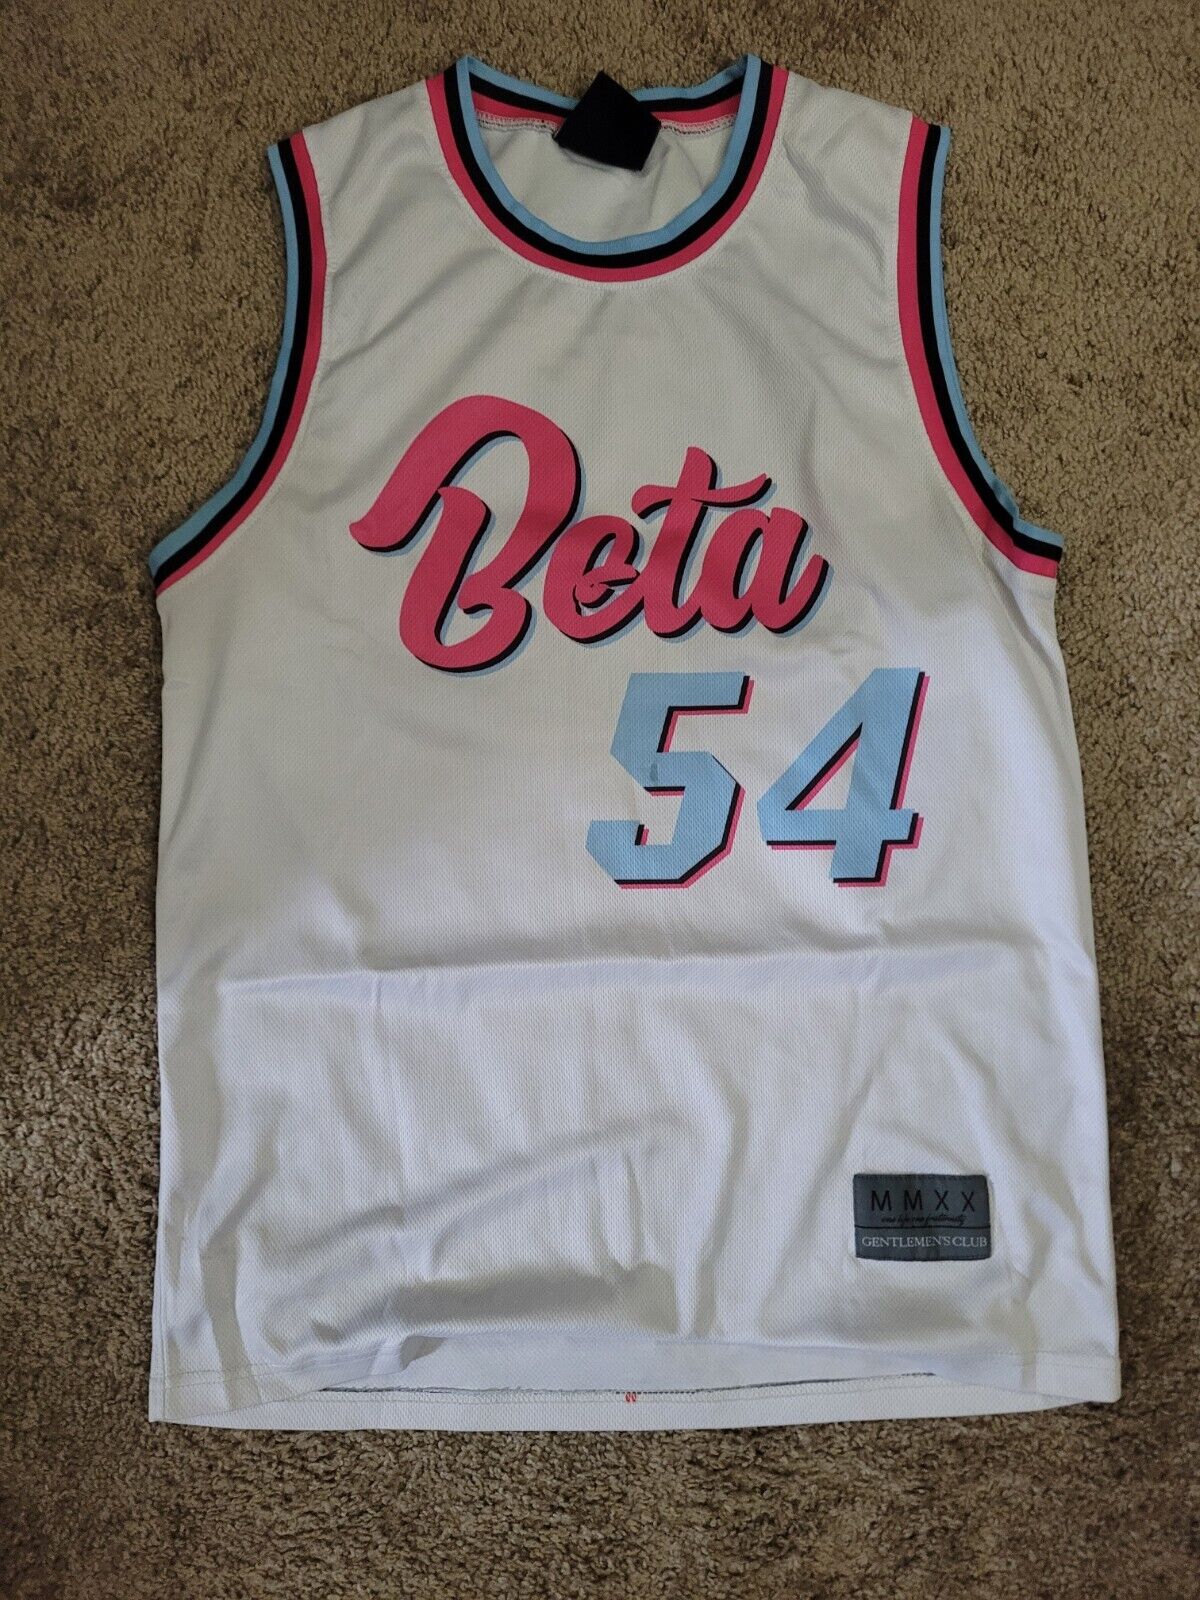 Beta Theta Pi Fraternity Intramural Basketball Jersey/Miami Heat Style